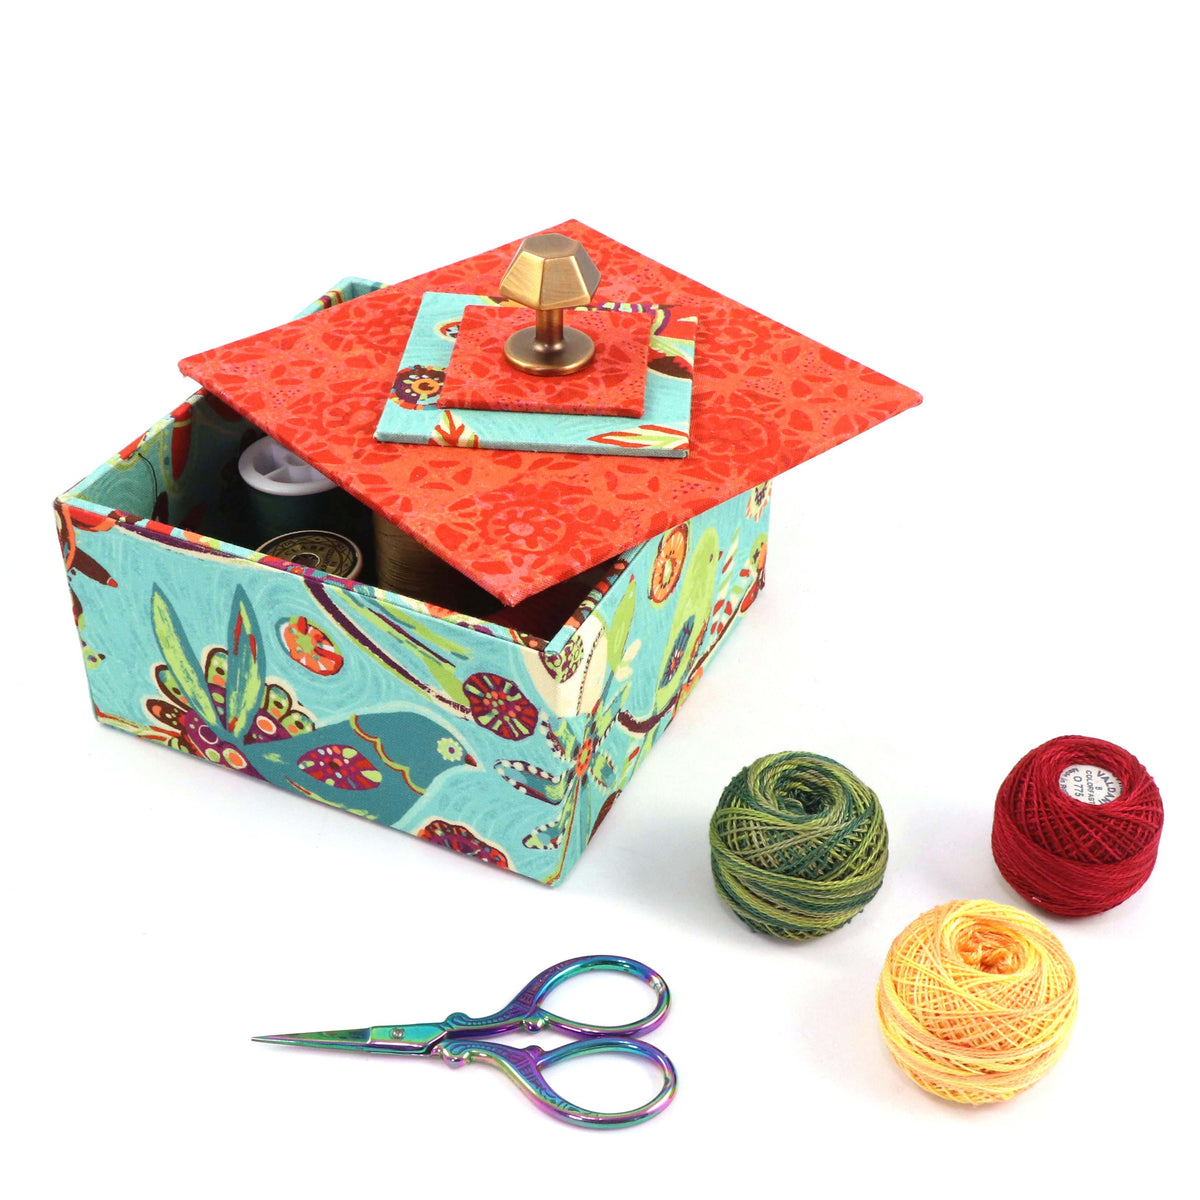 Square box DIY kit, fabric box kit, cartonnage kit 194, Video tutorial included - Colorway Arts